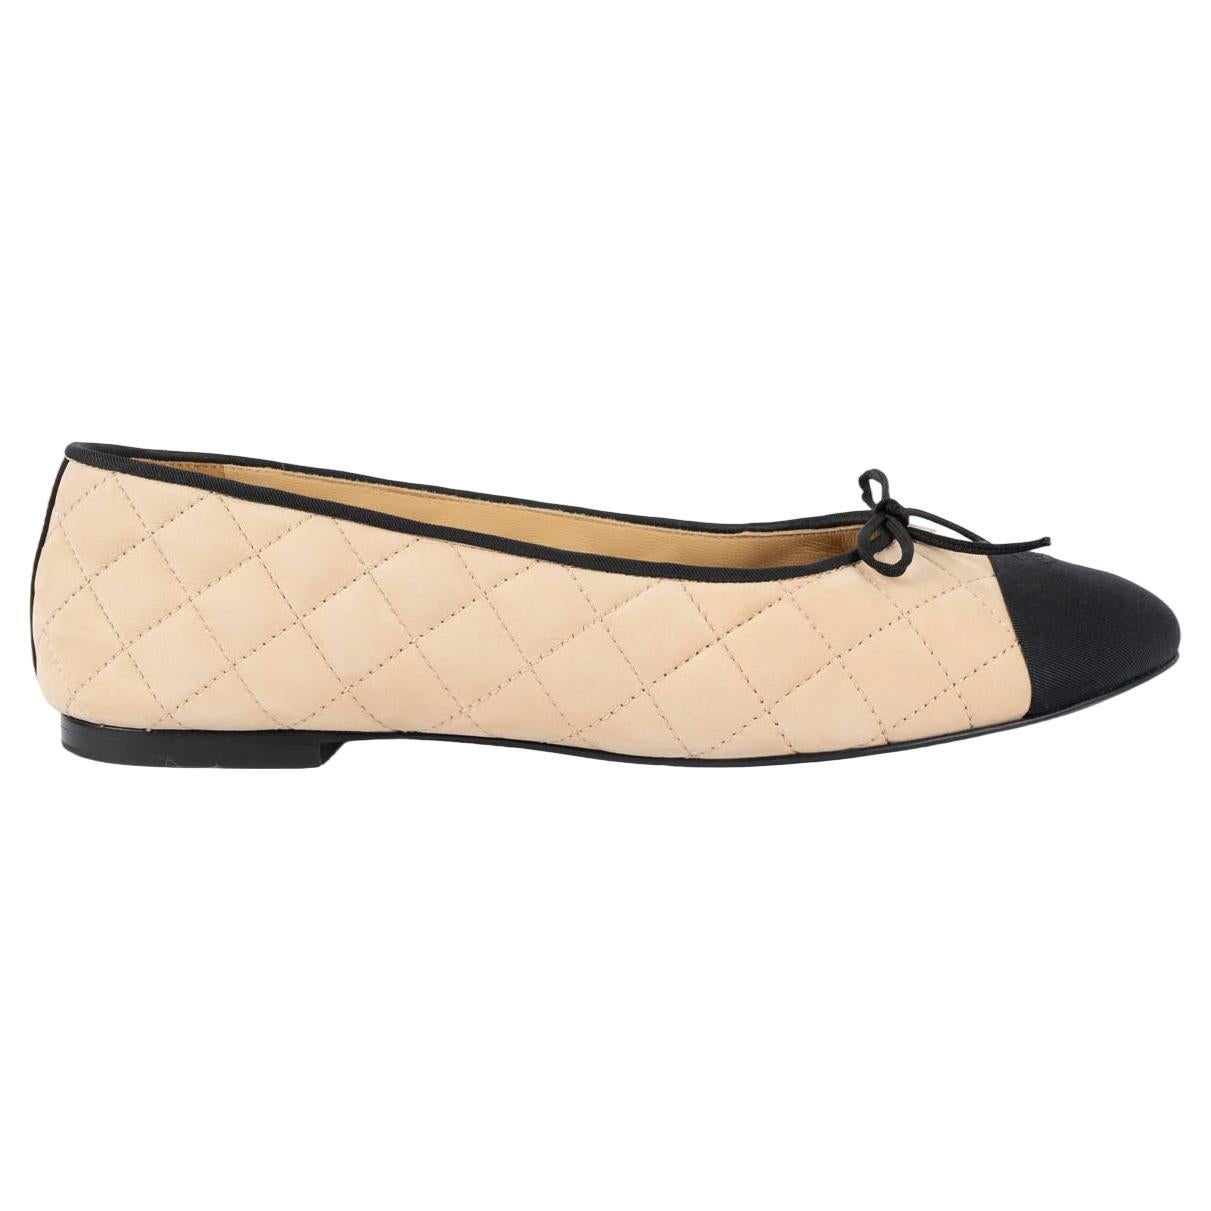 Chanel Women's Cap Toe Ankle Chain Ballerina Flats Leather Black 2279018